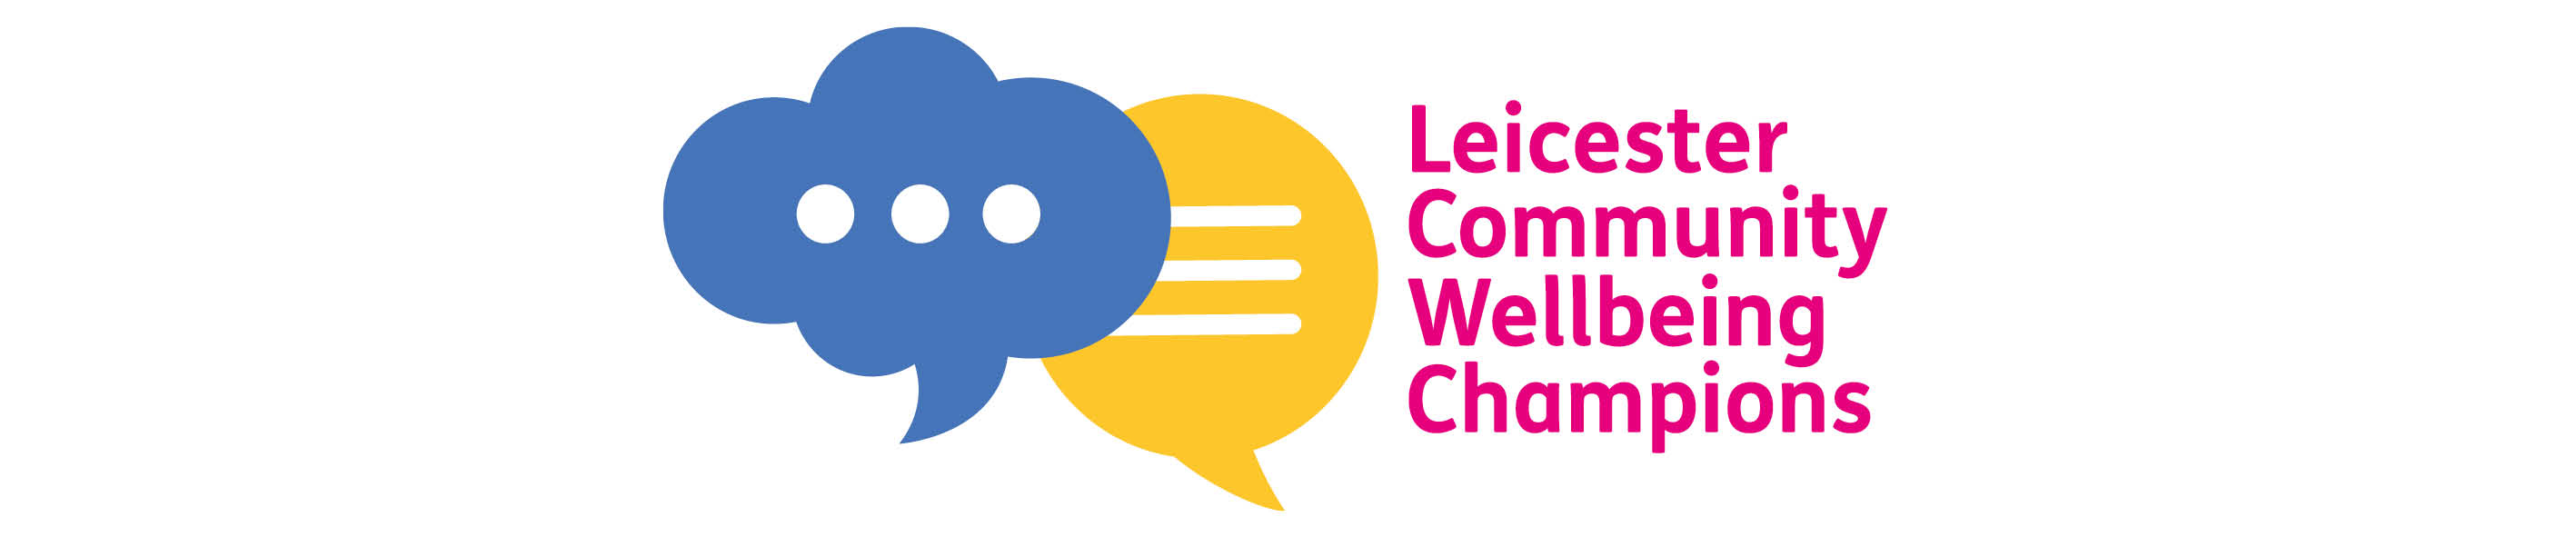 Community Wellbeing Champions logo